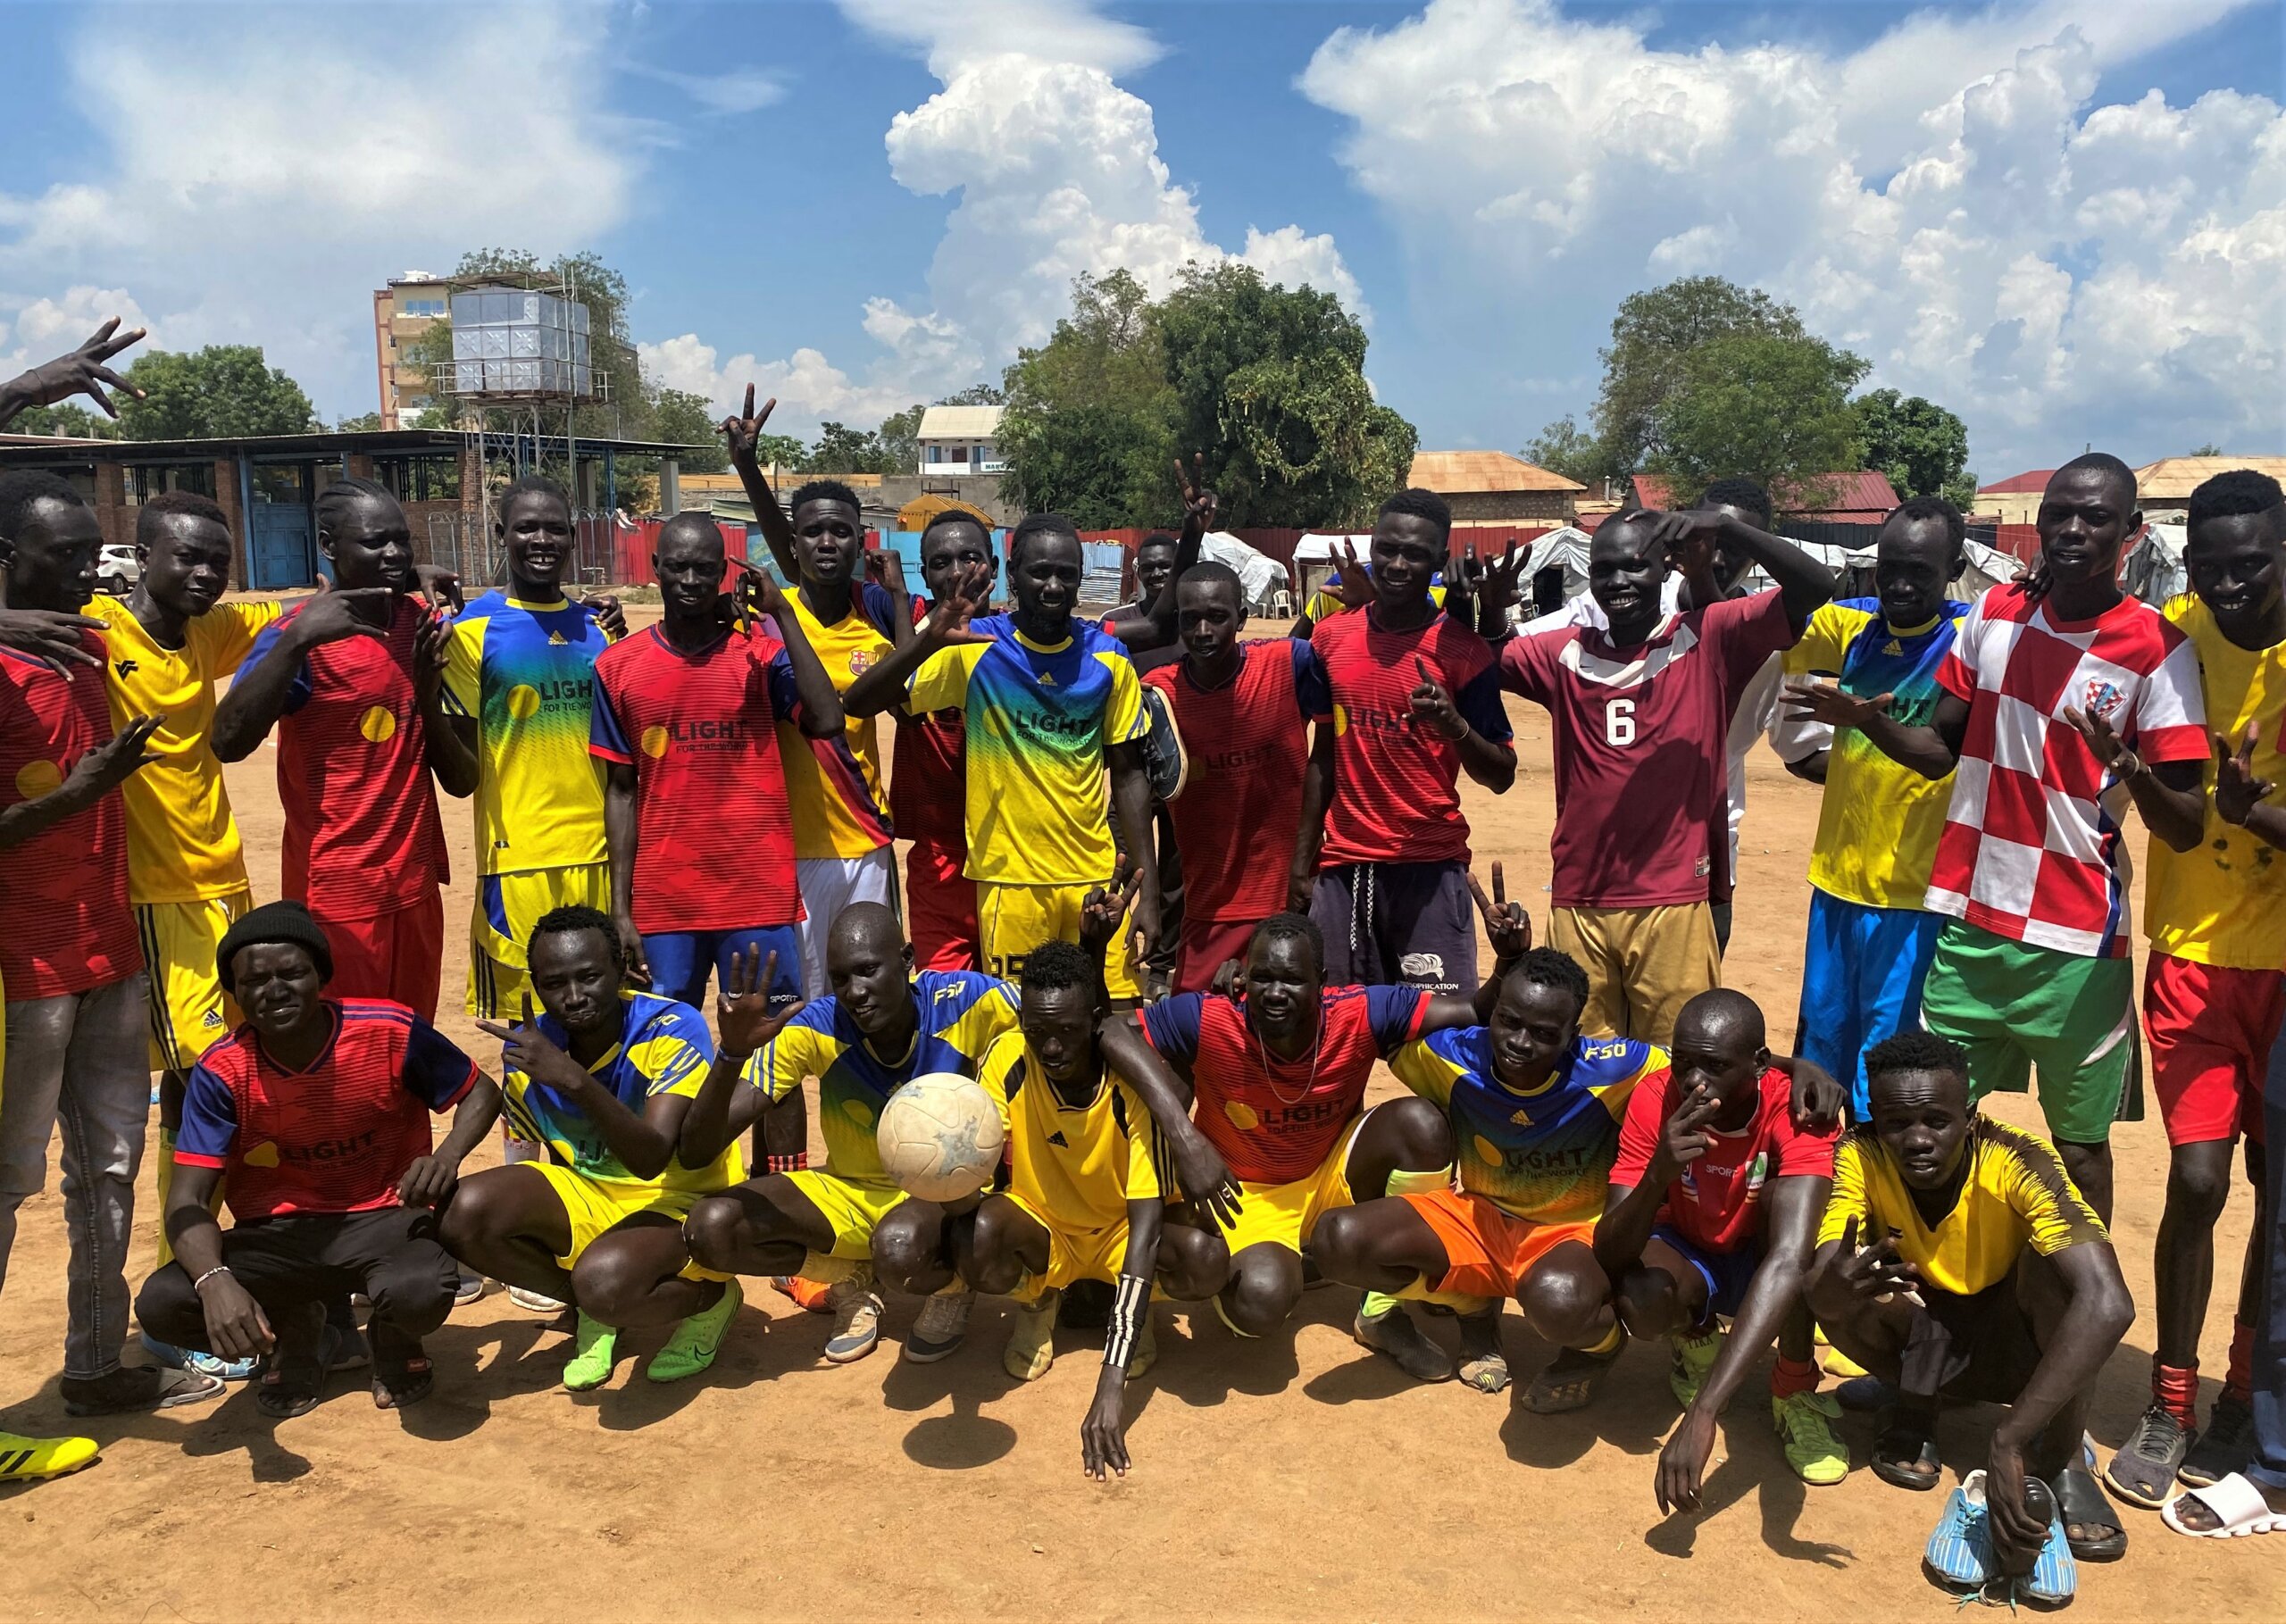 The Sports for Peace football team at Mahad IDP camp